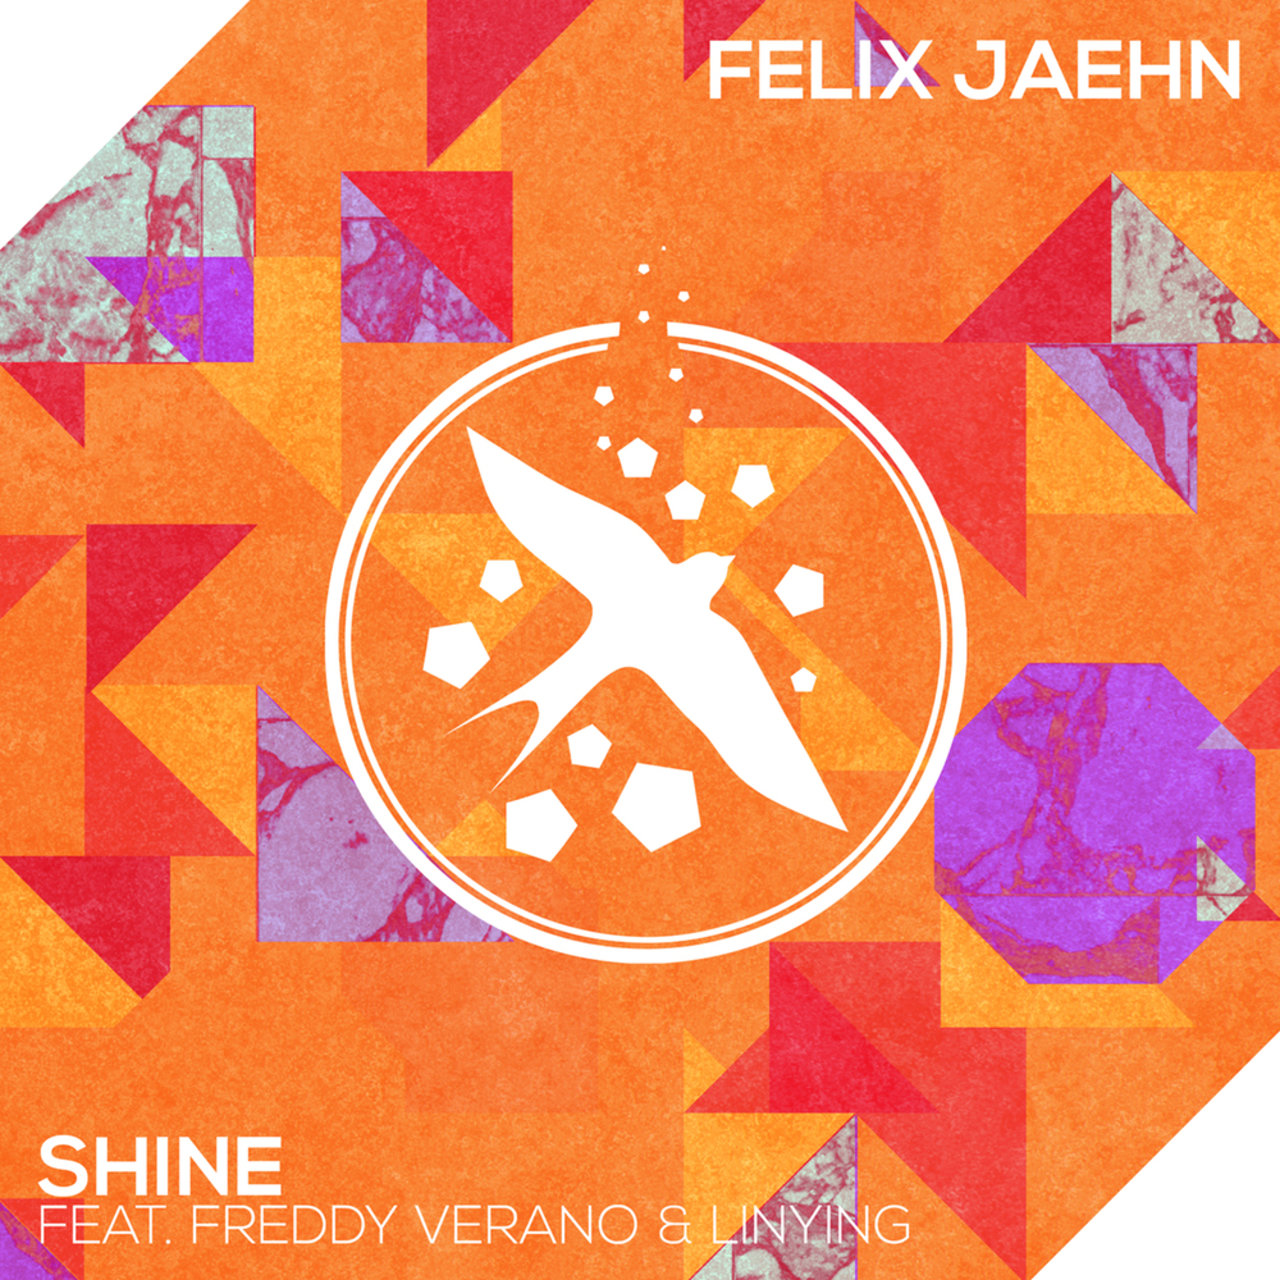 Felix Jaehn ft. featuring Freddy Verano & Linying Shine cover artwork